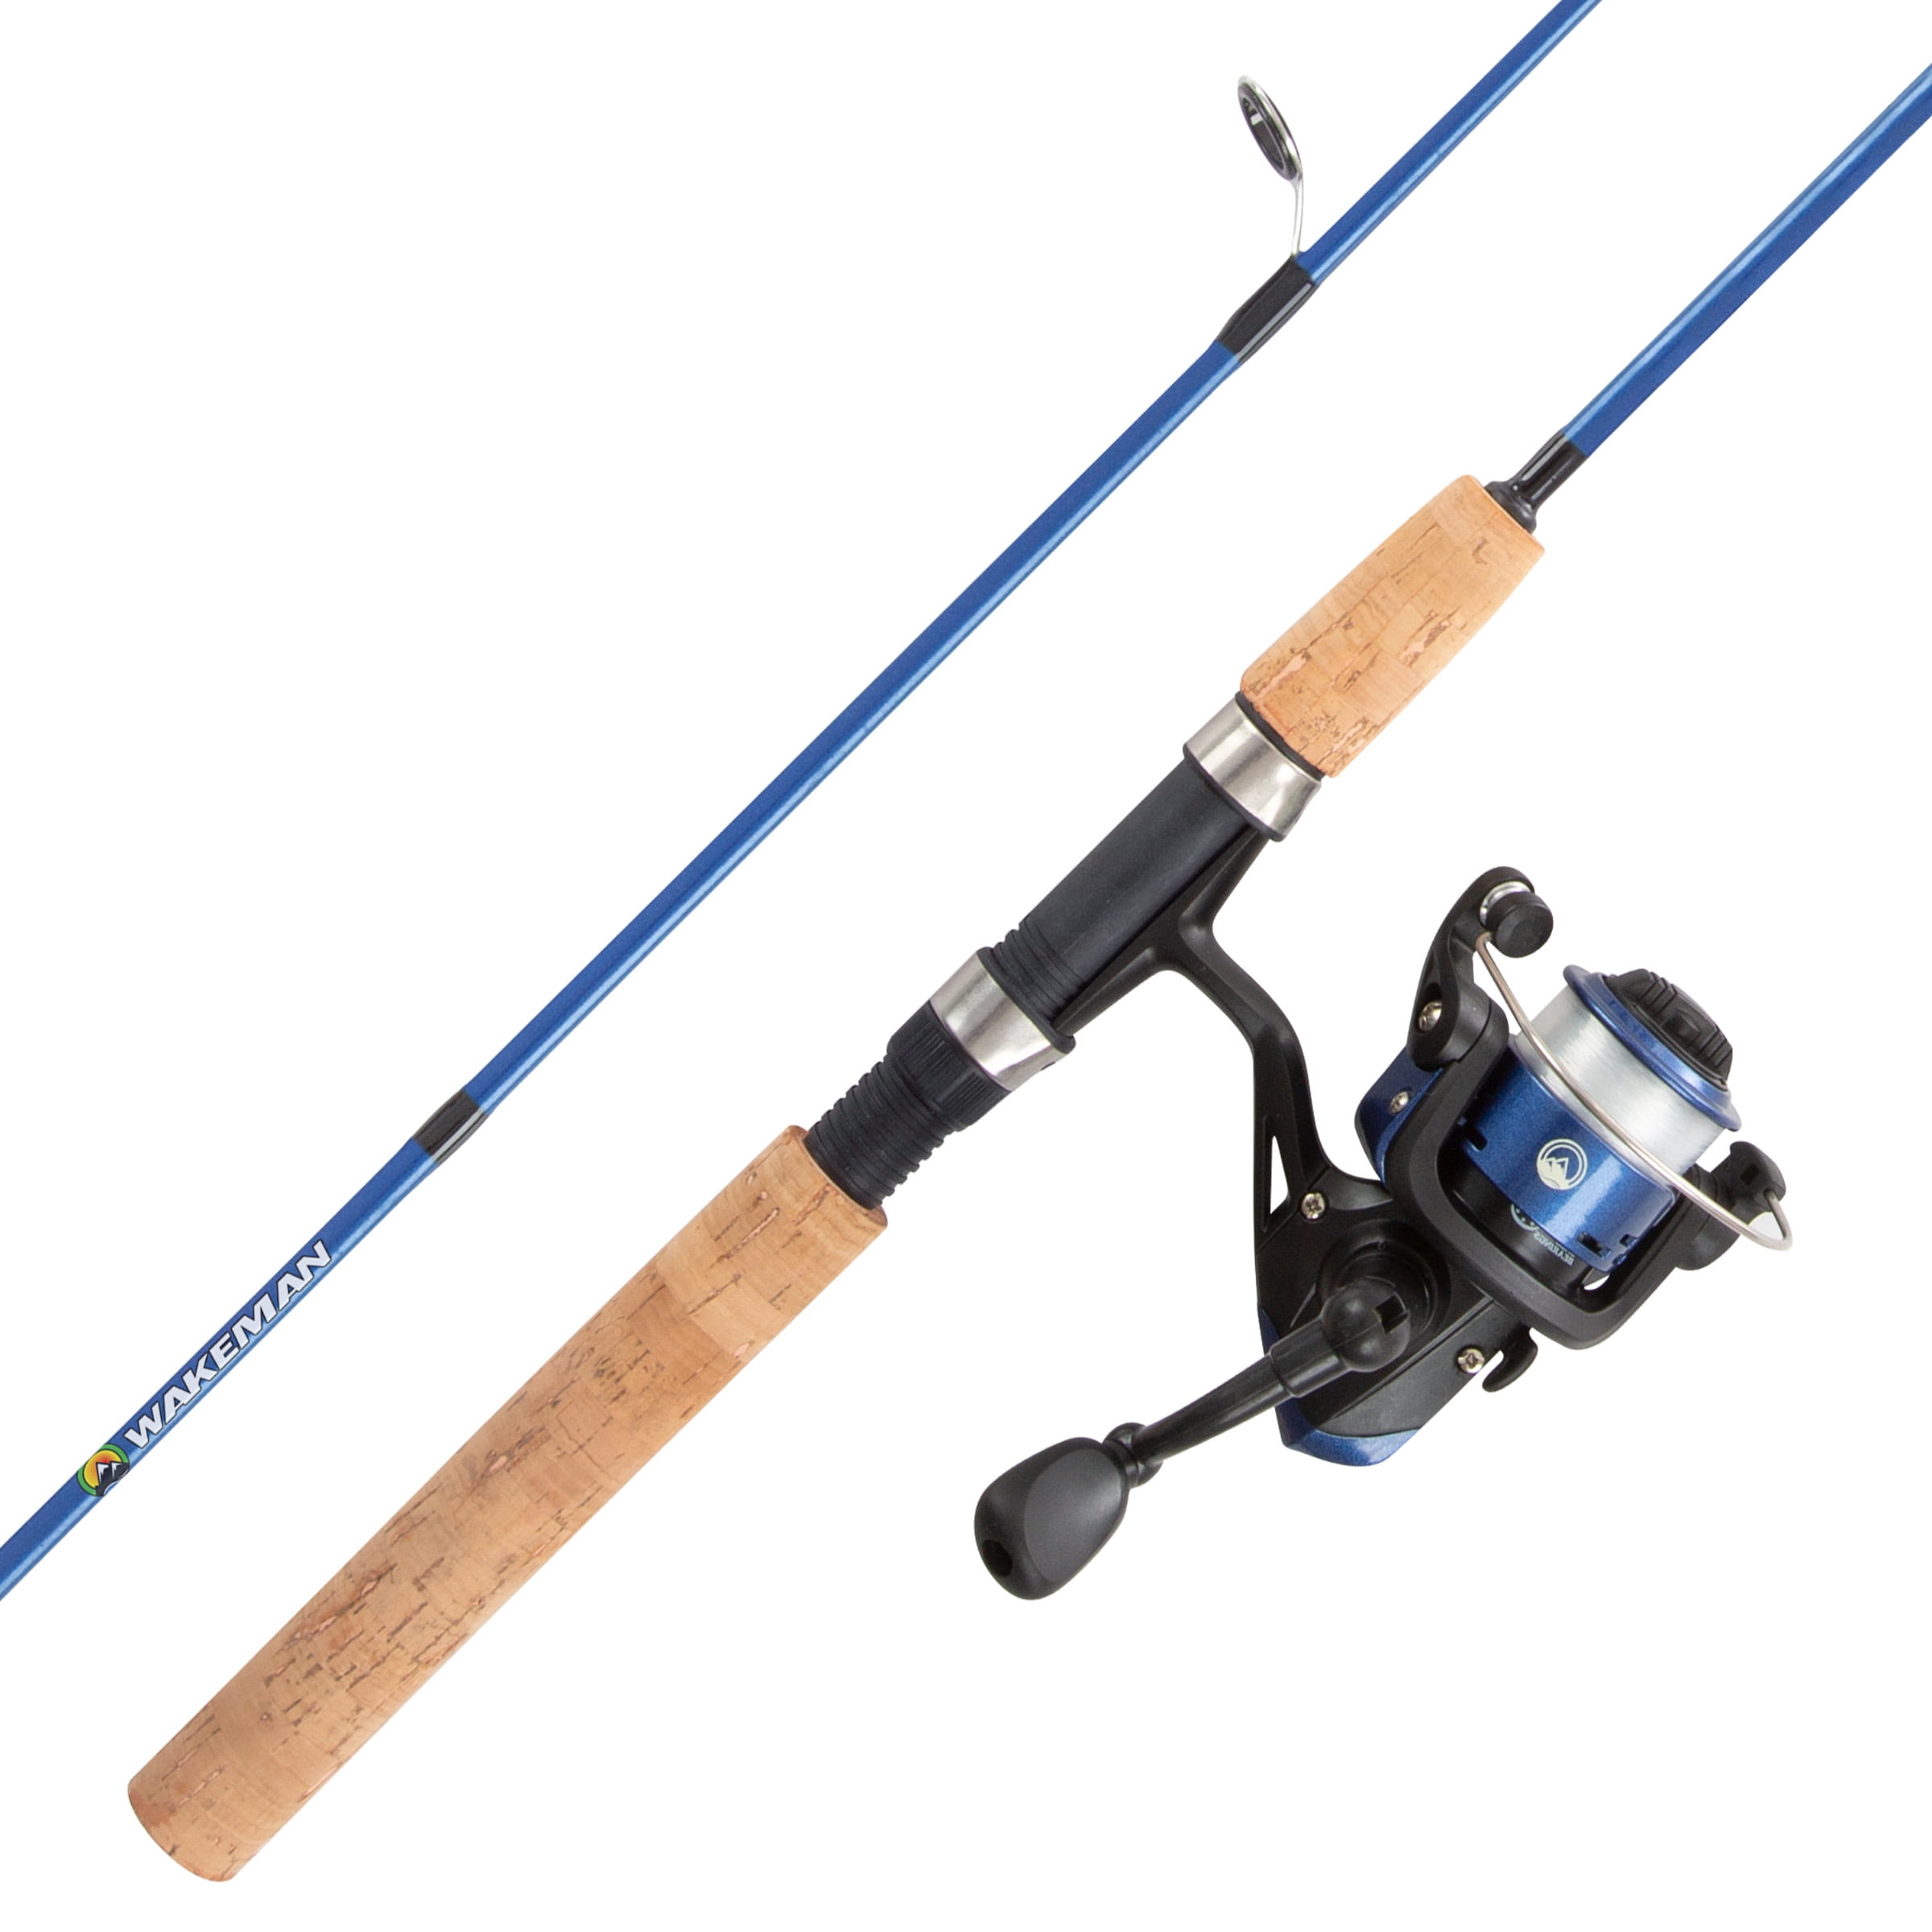 RAD Youth Fishing Rod & Reel Combo-5'2” Fiberglass Pole